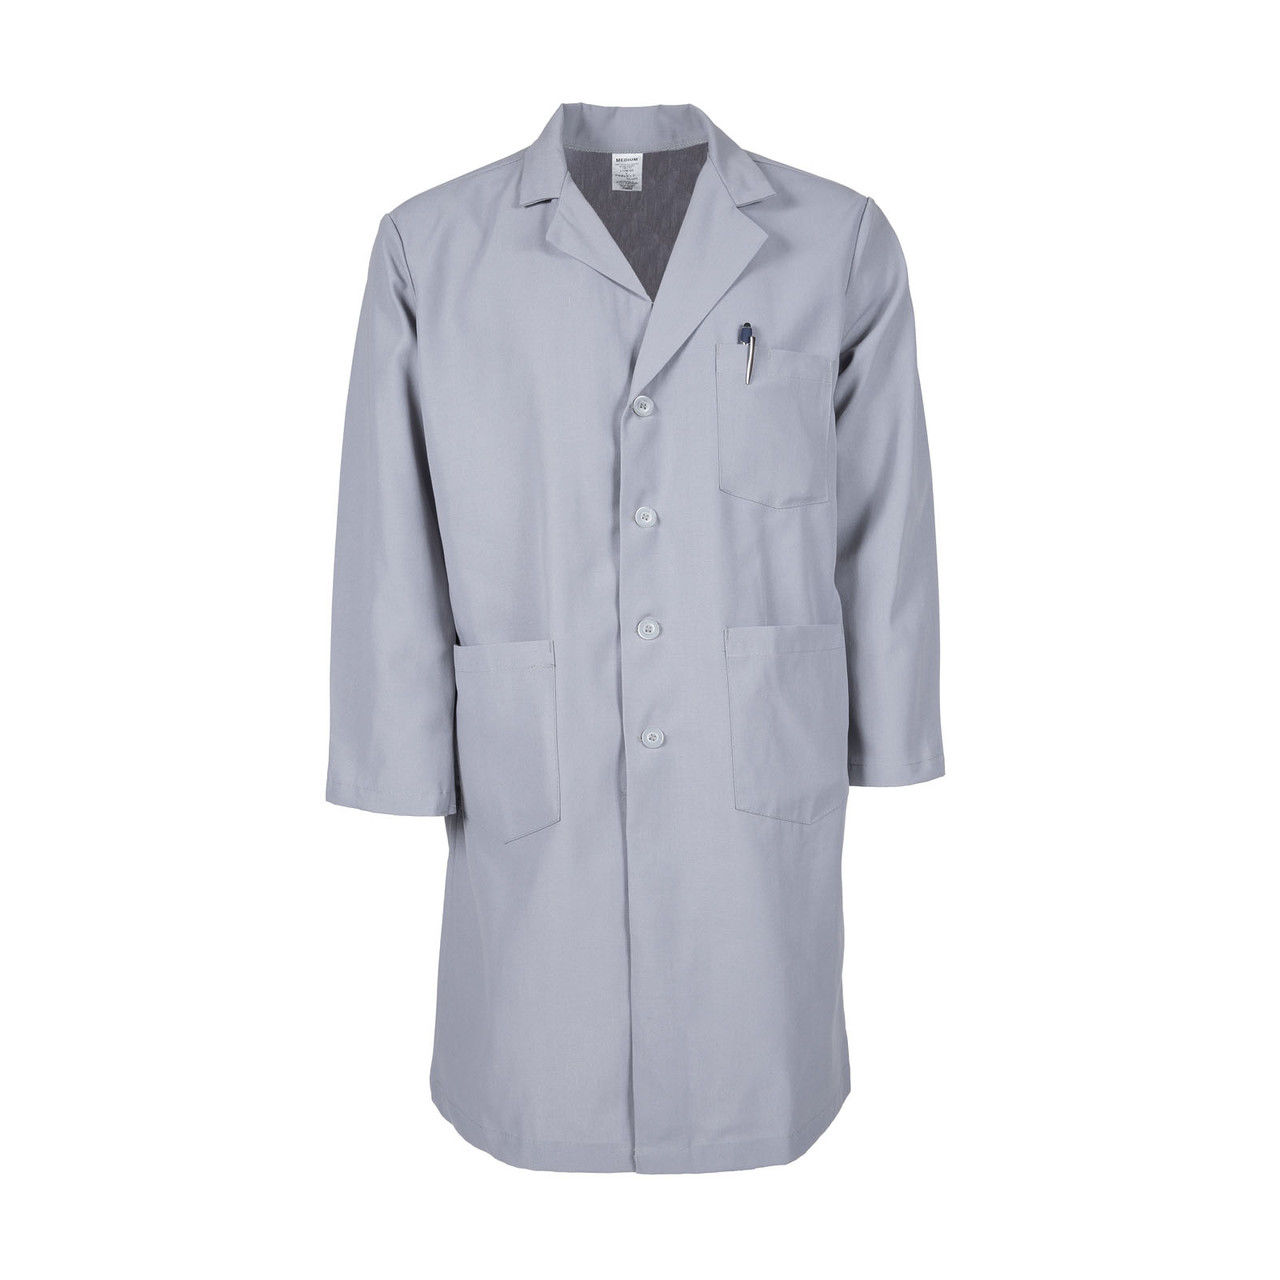 What is the description of a laboratory coat?